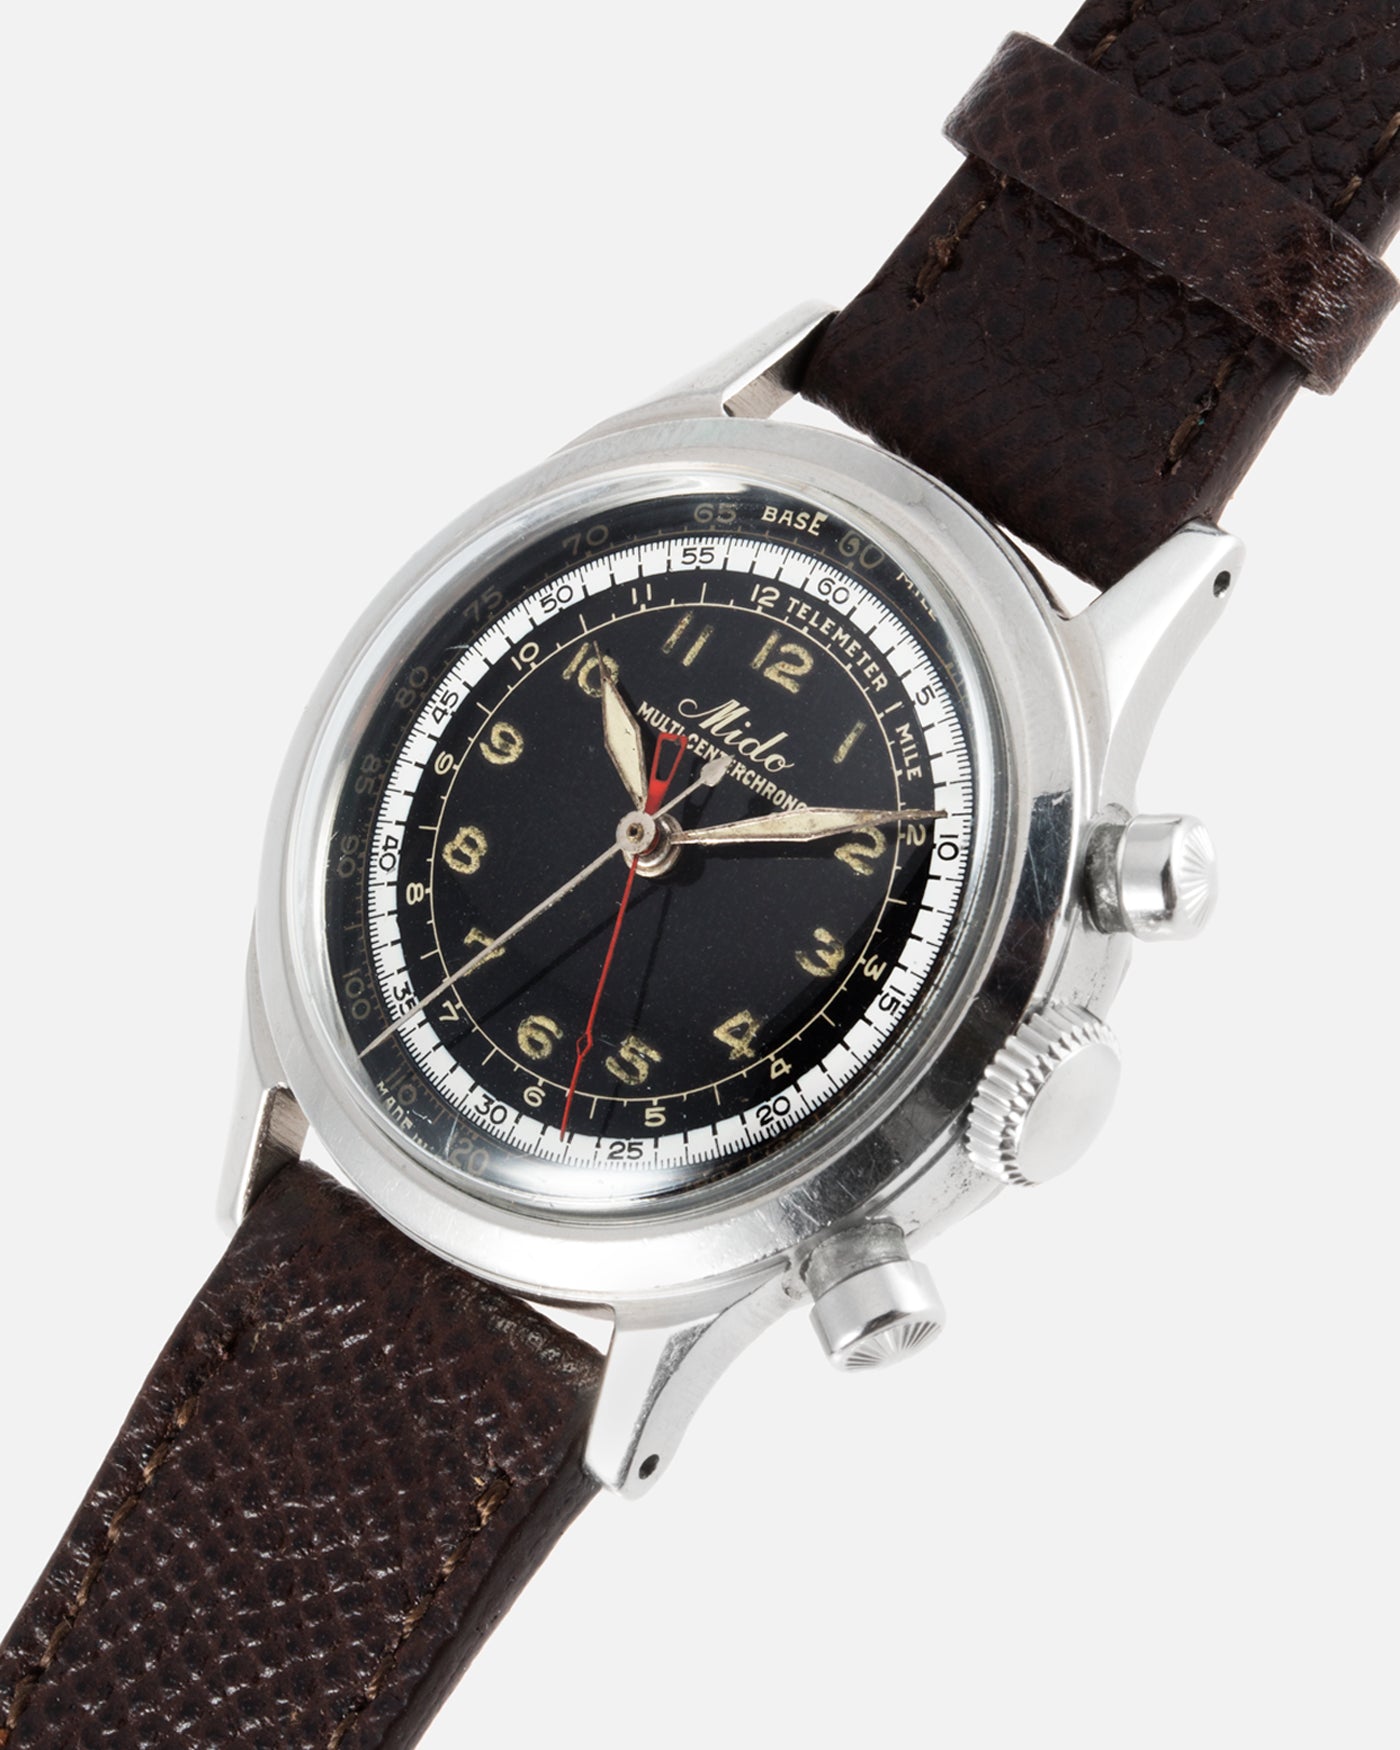 Mido Multi Centerchrono Vintage Chronograph Watch | S.Song Vintage ...